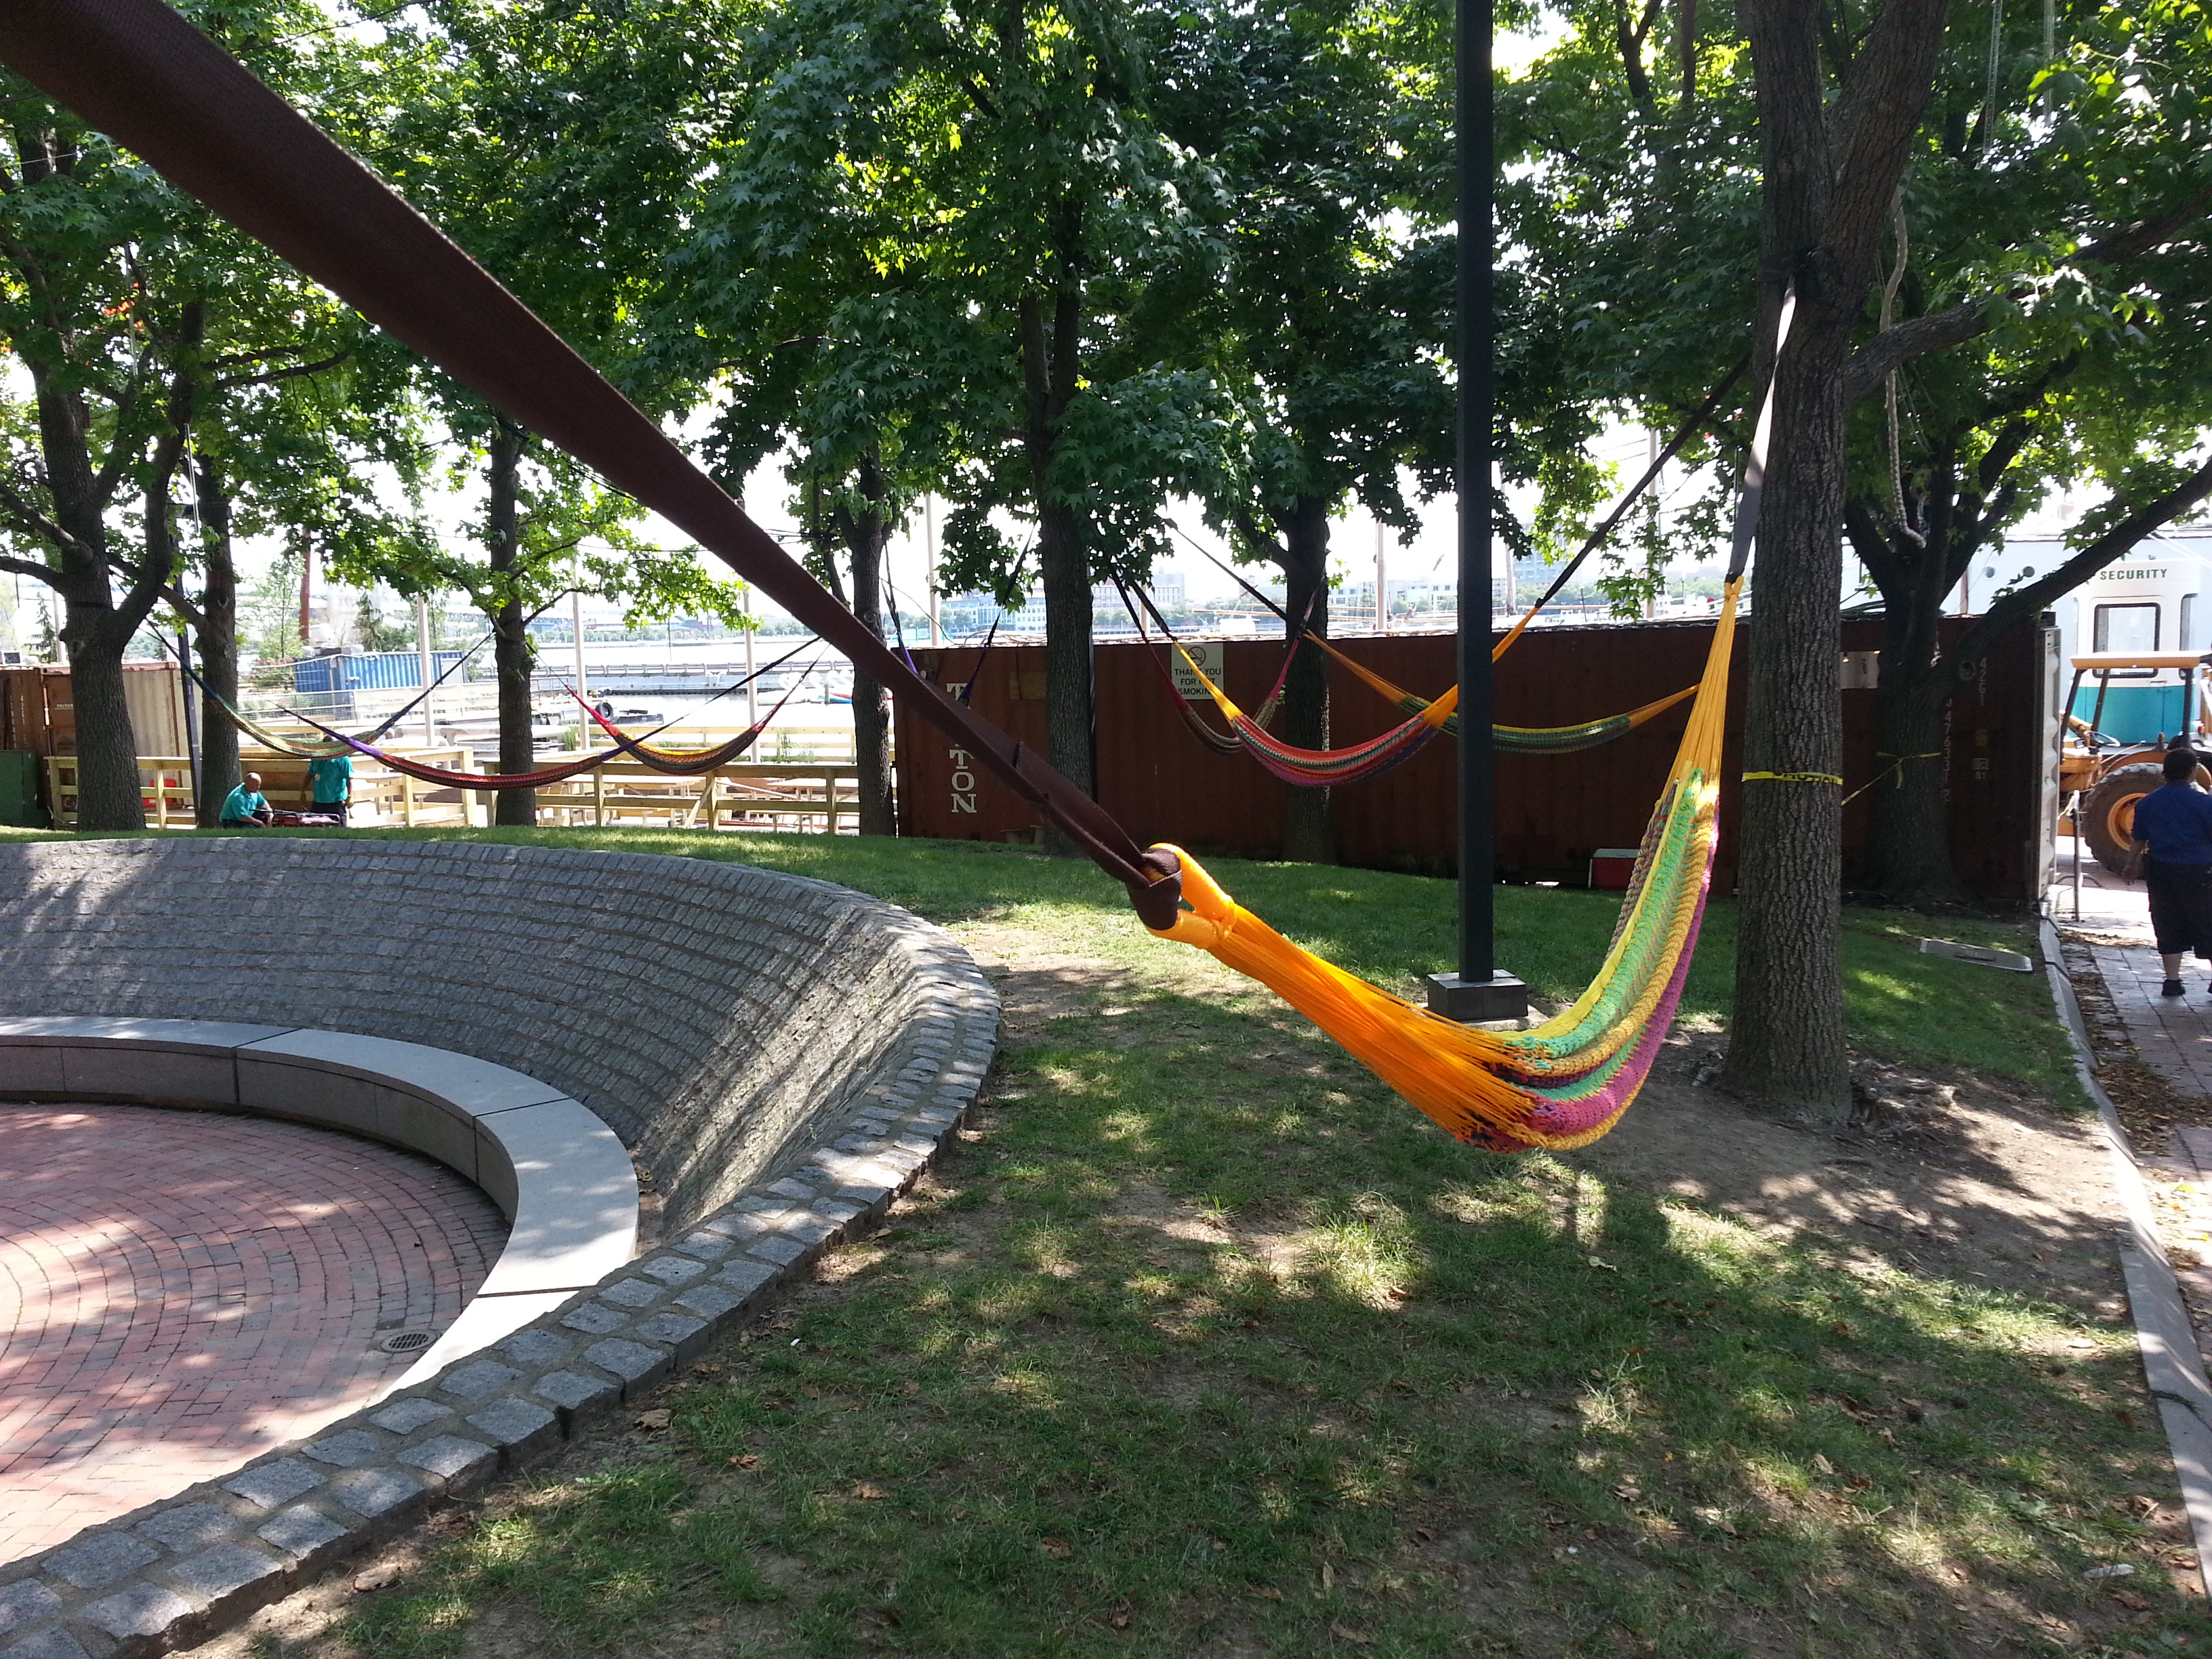 A few of the many hammocks at Spruce Street Garden Park